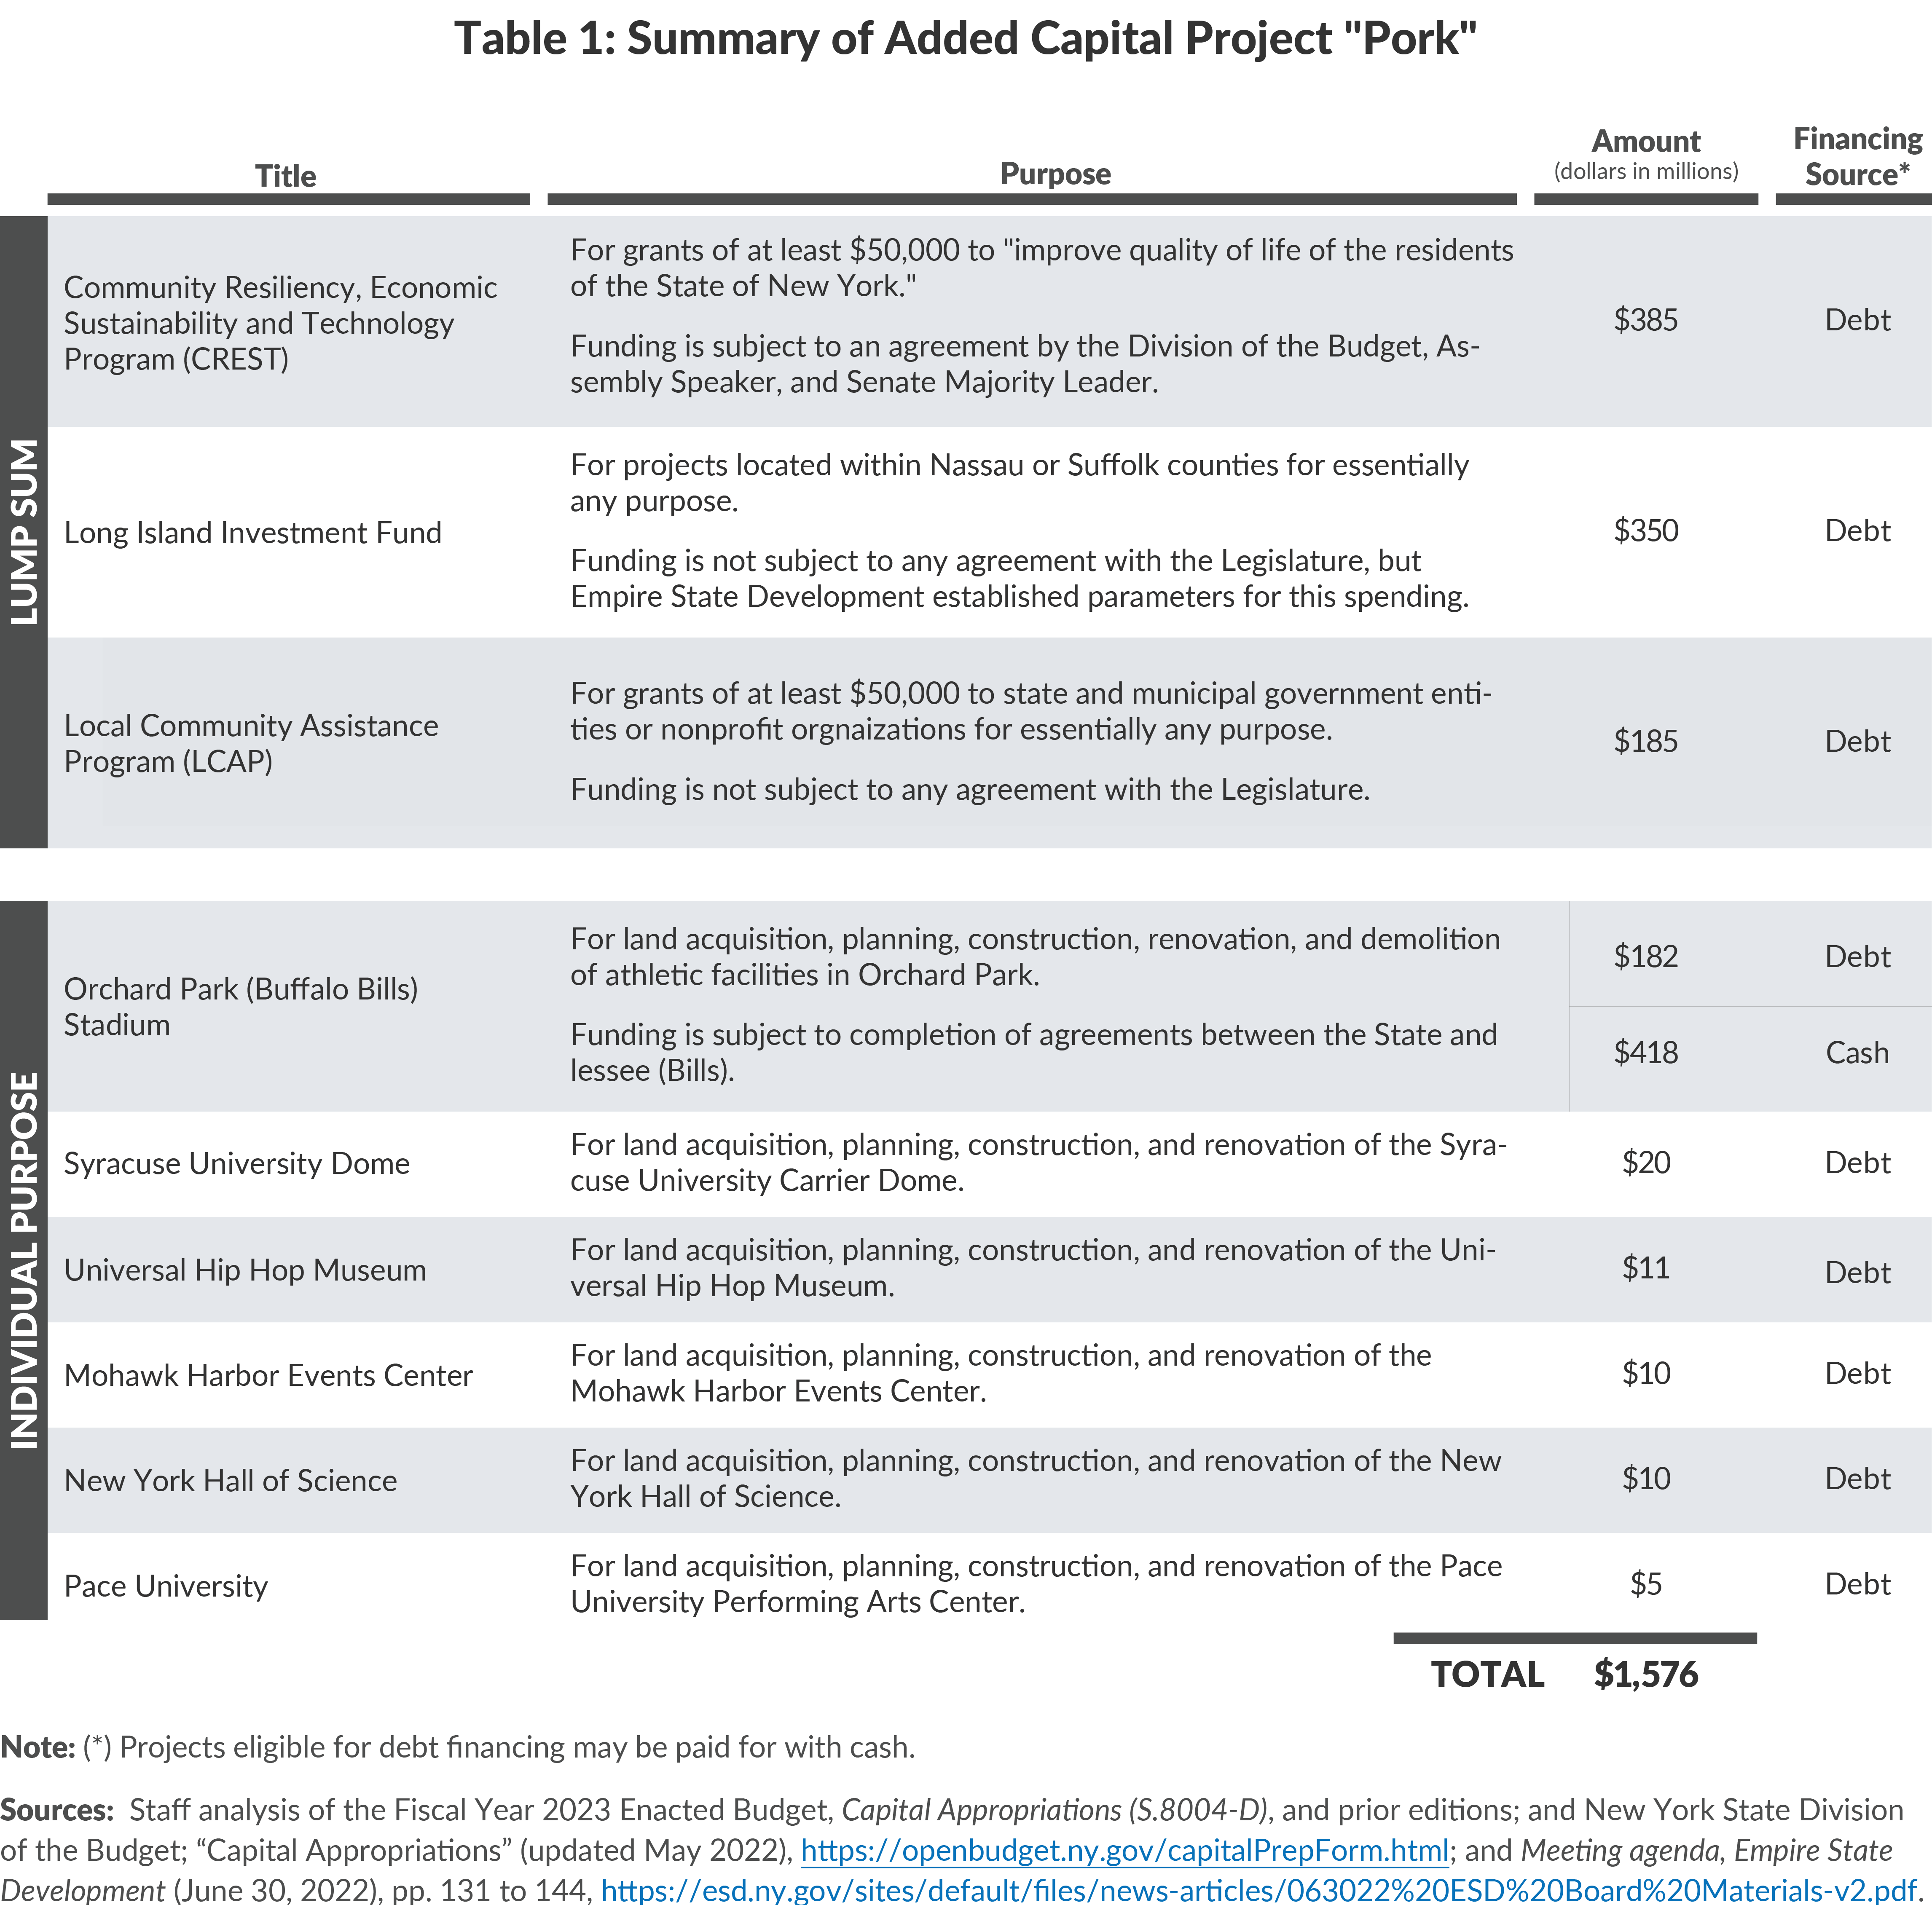 Table 1: Summary of Added Capital Project "Pork"